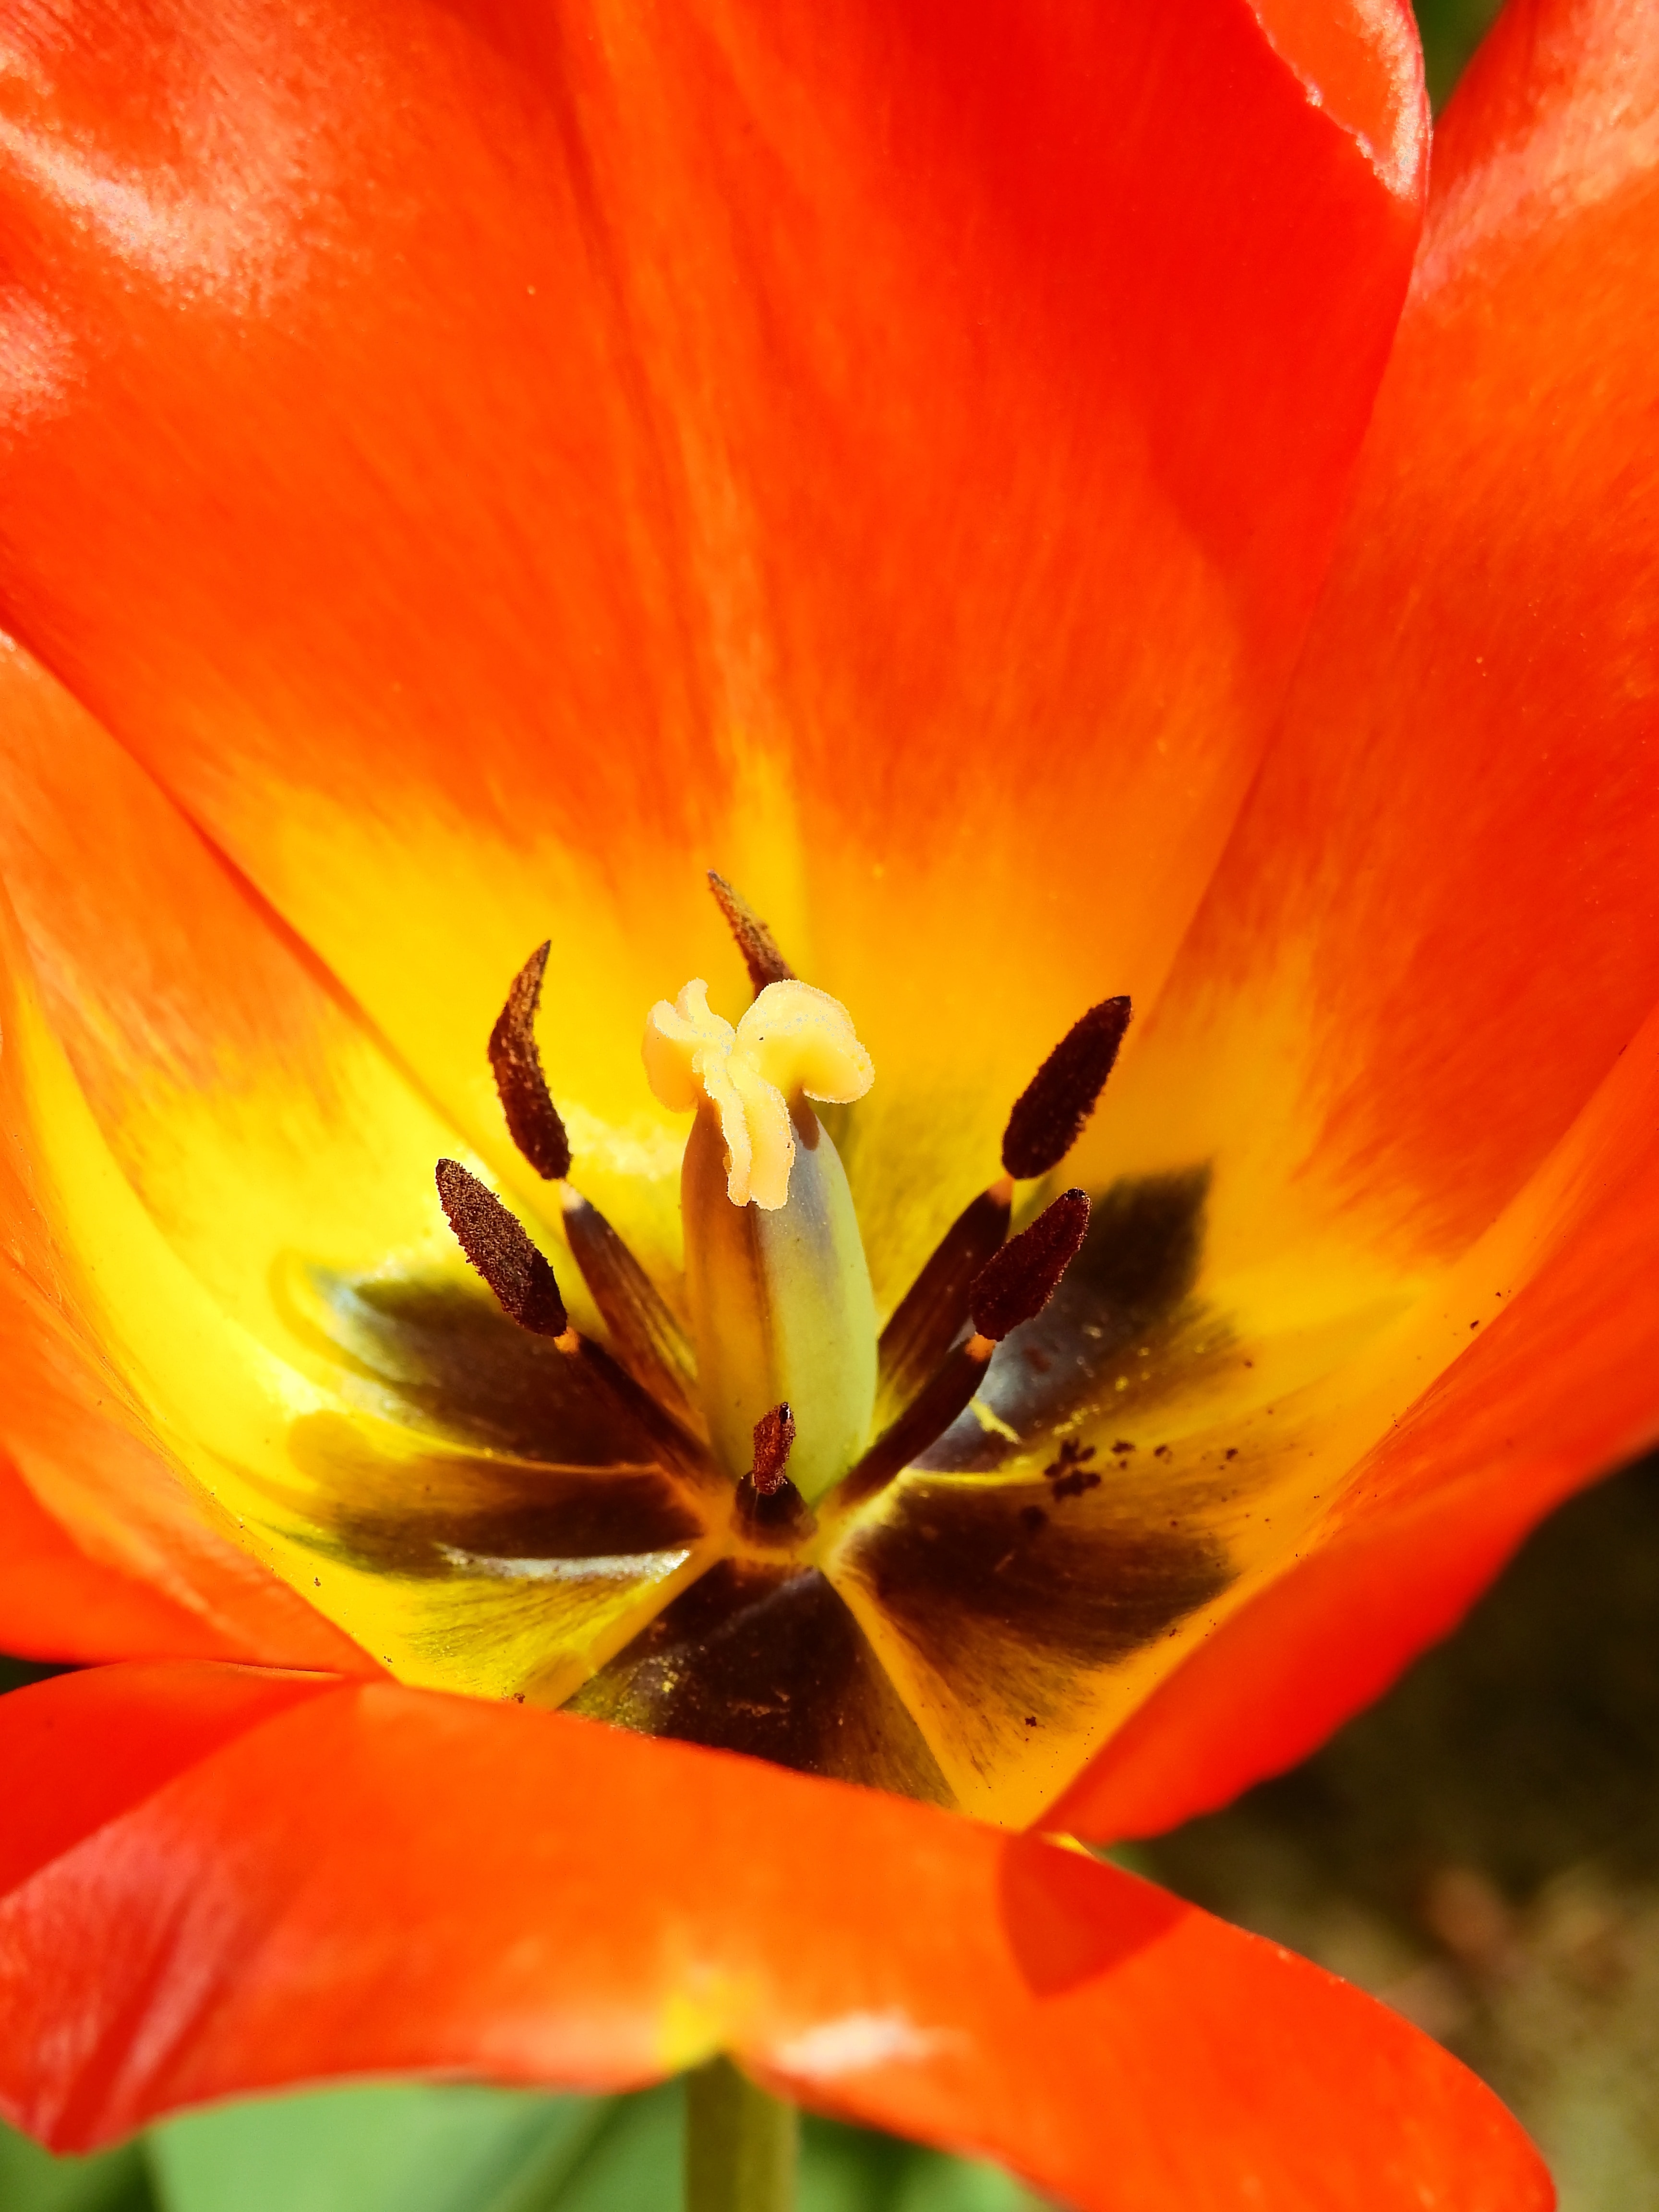 red petaled flower in closeup shot